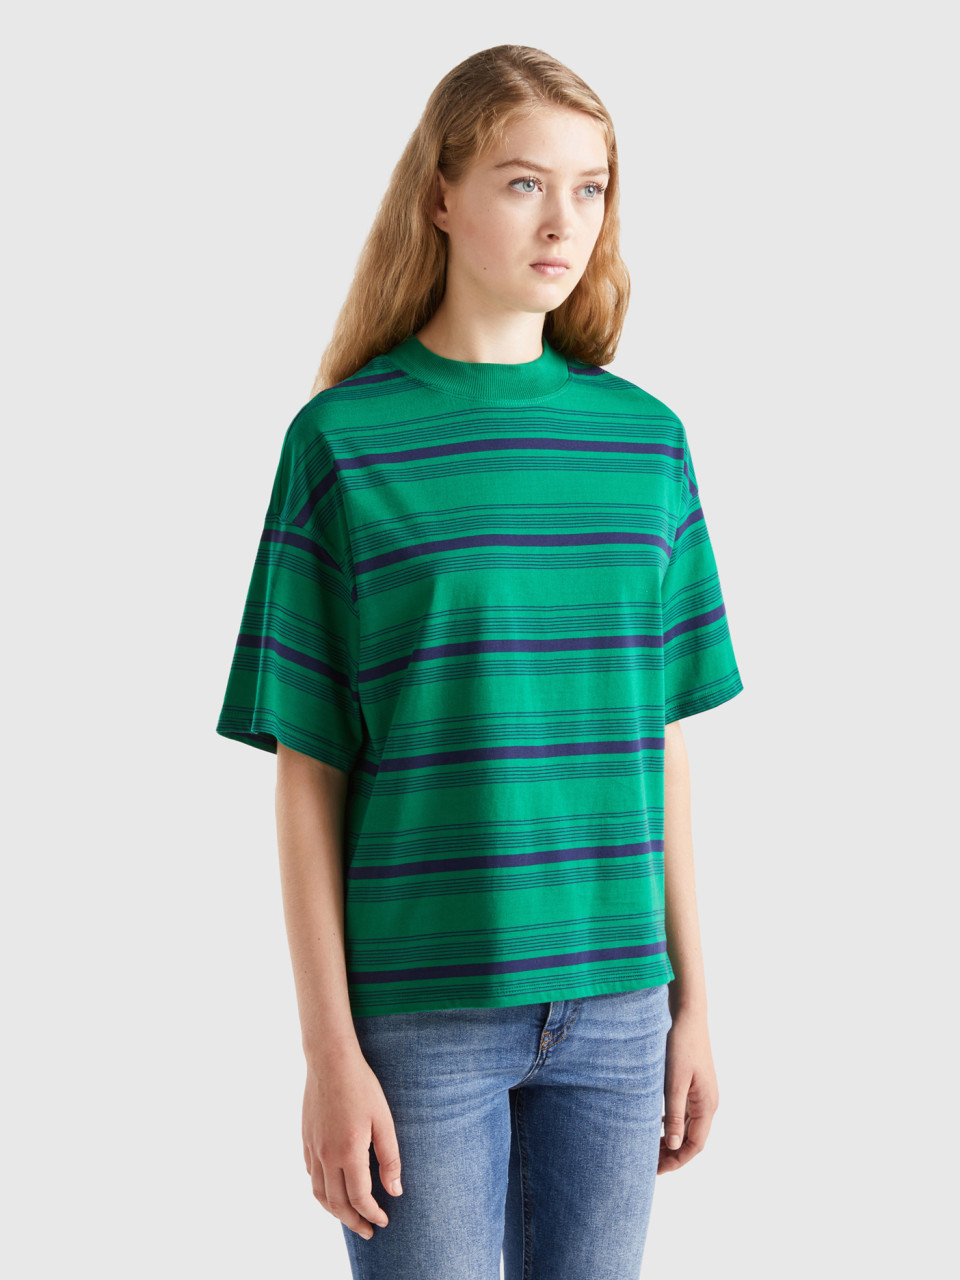 Benetton, Striped Turtleneck T-shirt, Green, Women